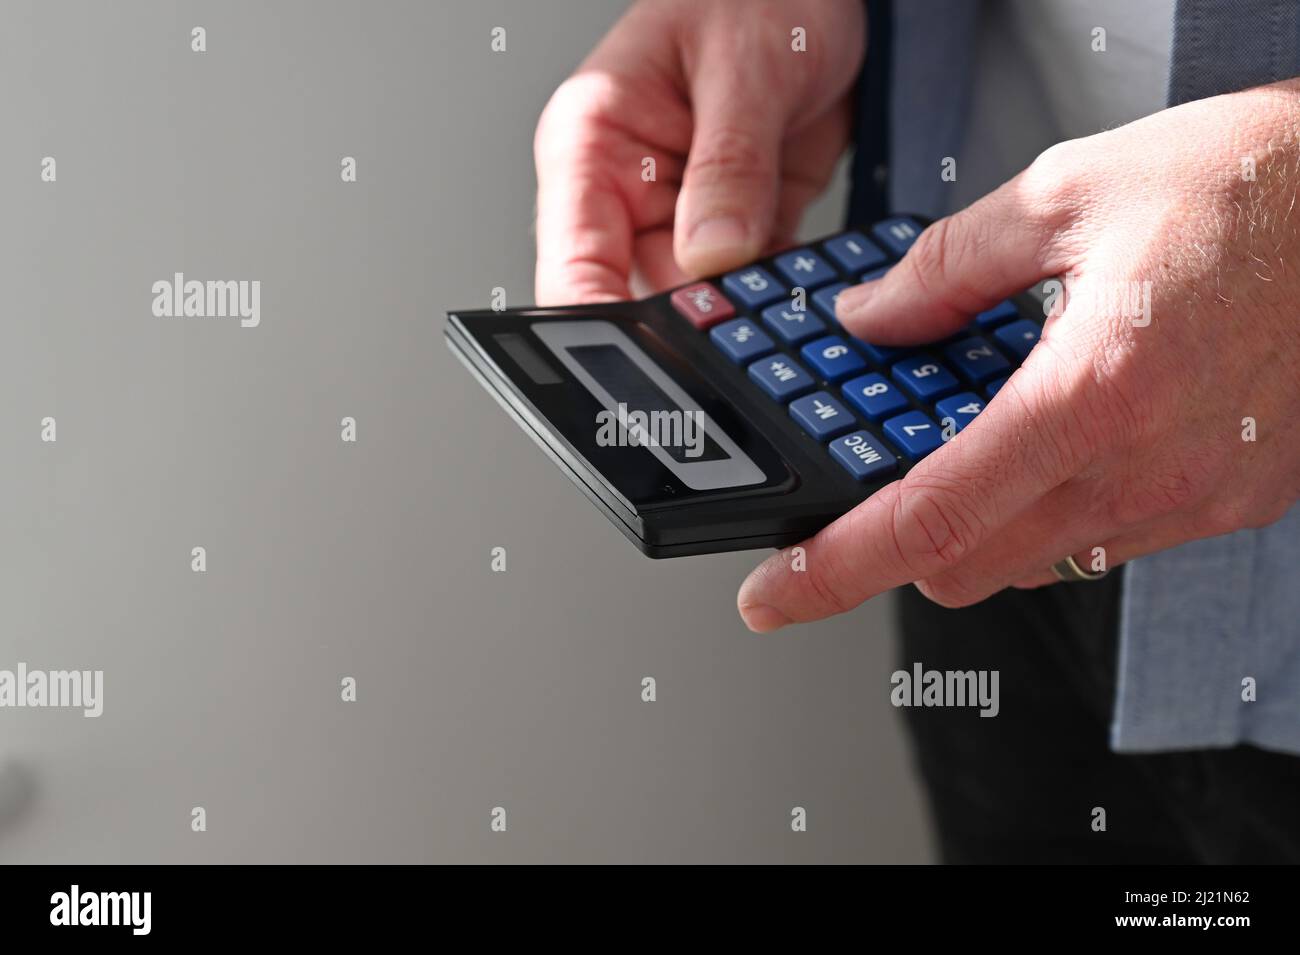 A man holding a calculator Stock Photo